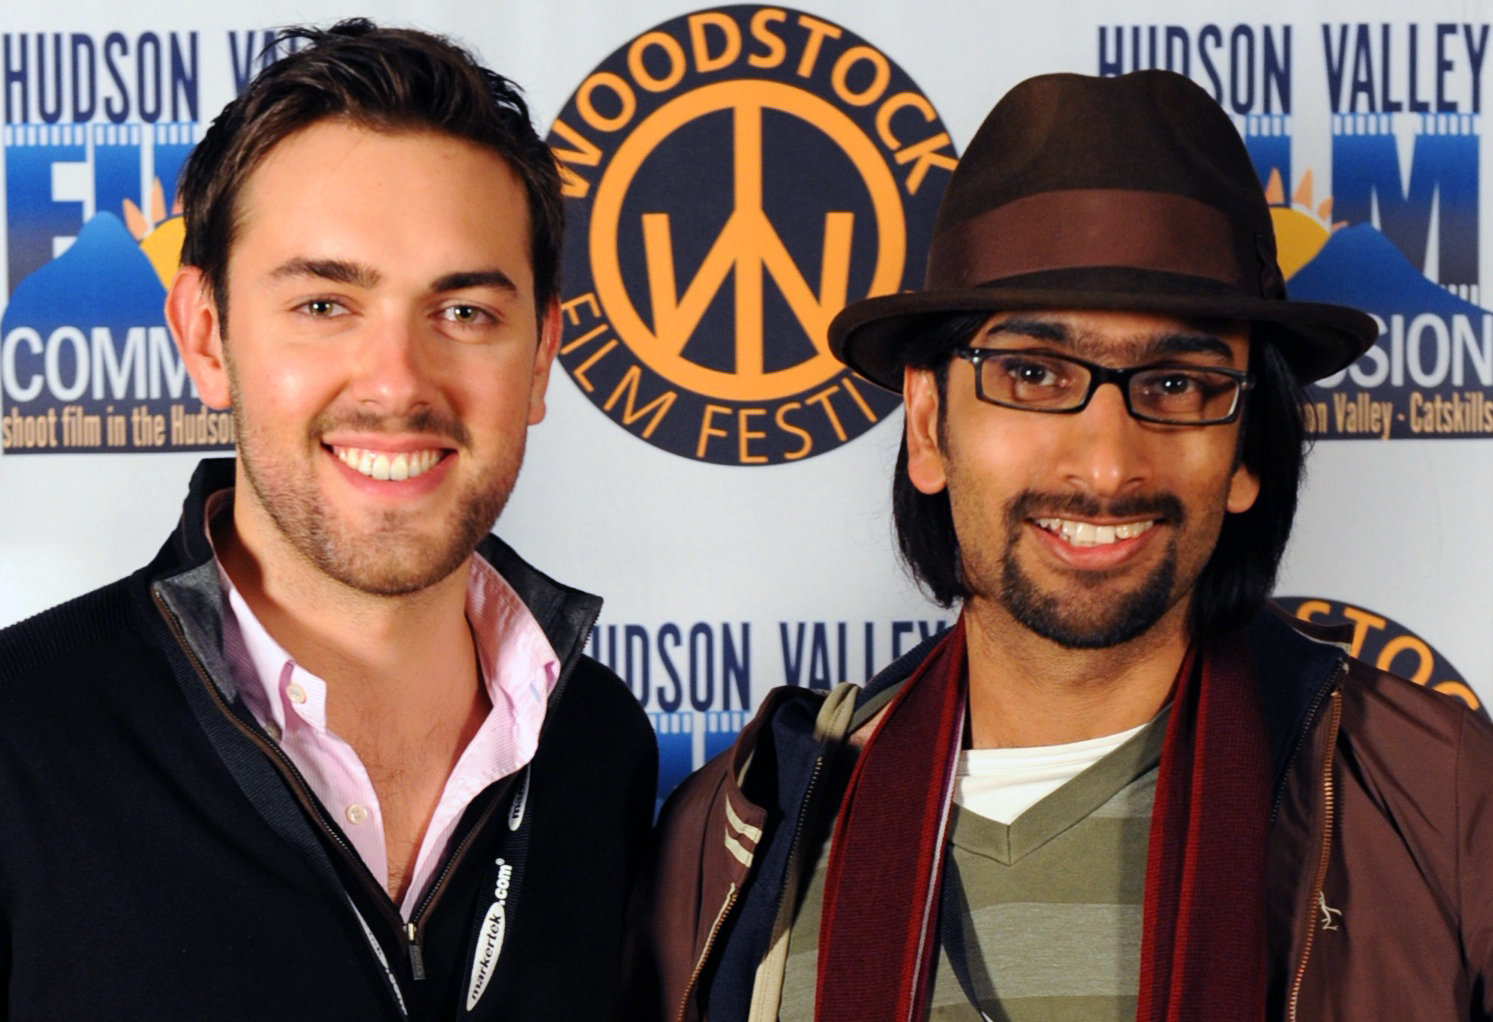 Paul Young and Kaushik Bhattacharya at Woodstock Film Festival 2012